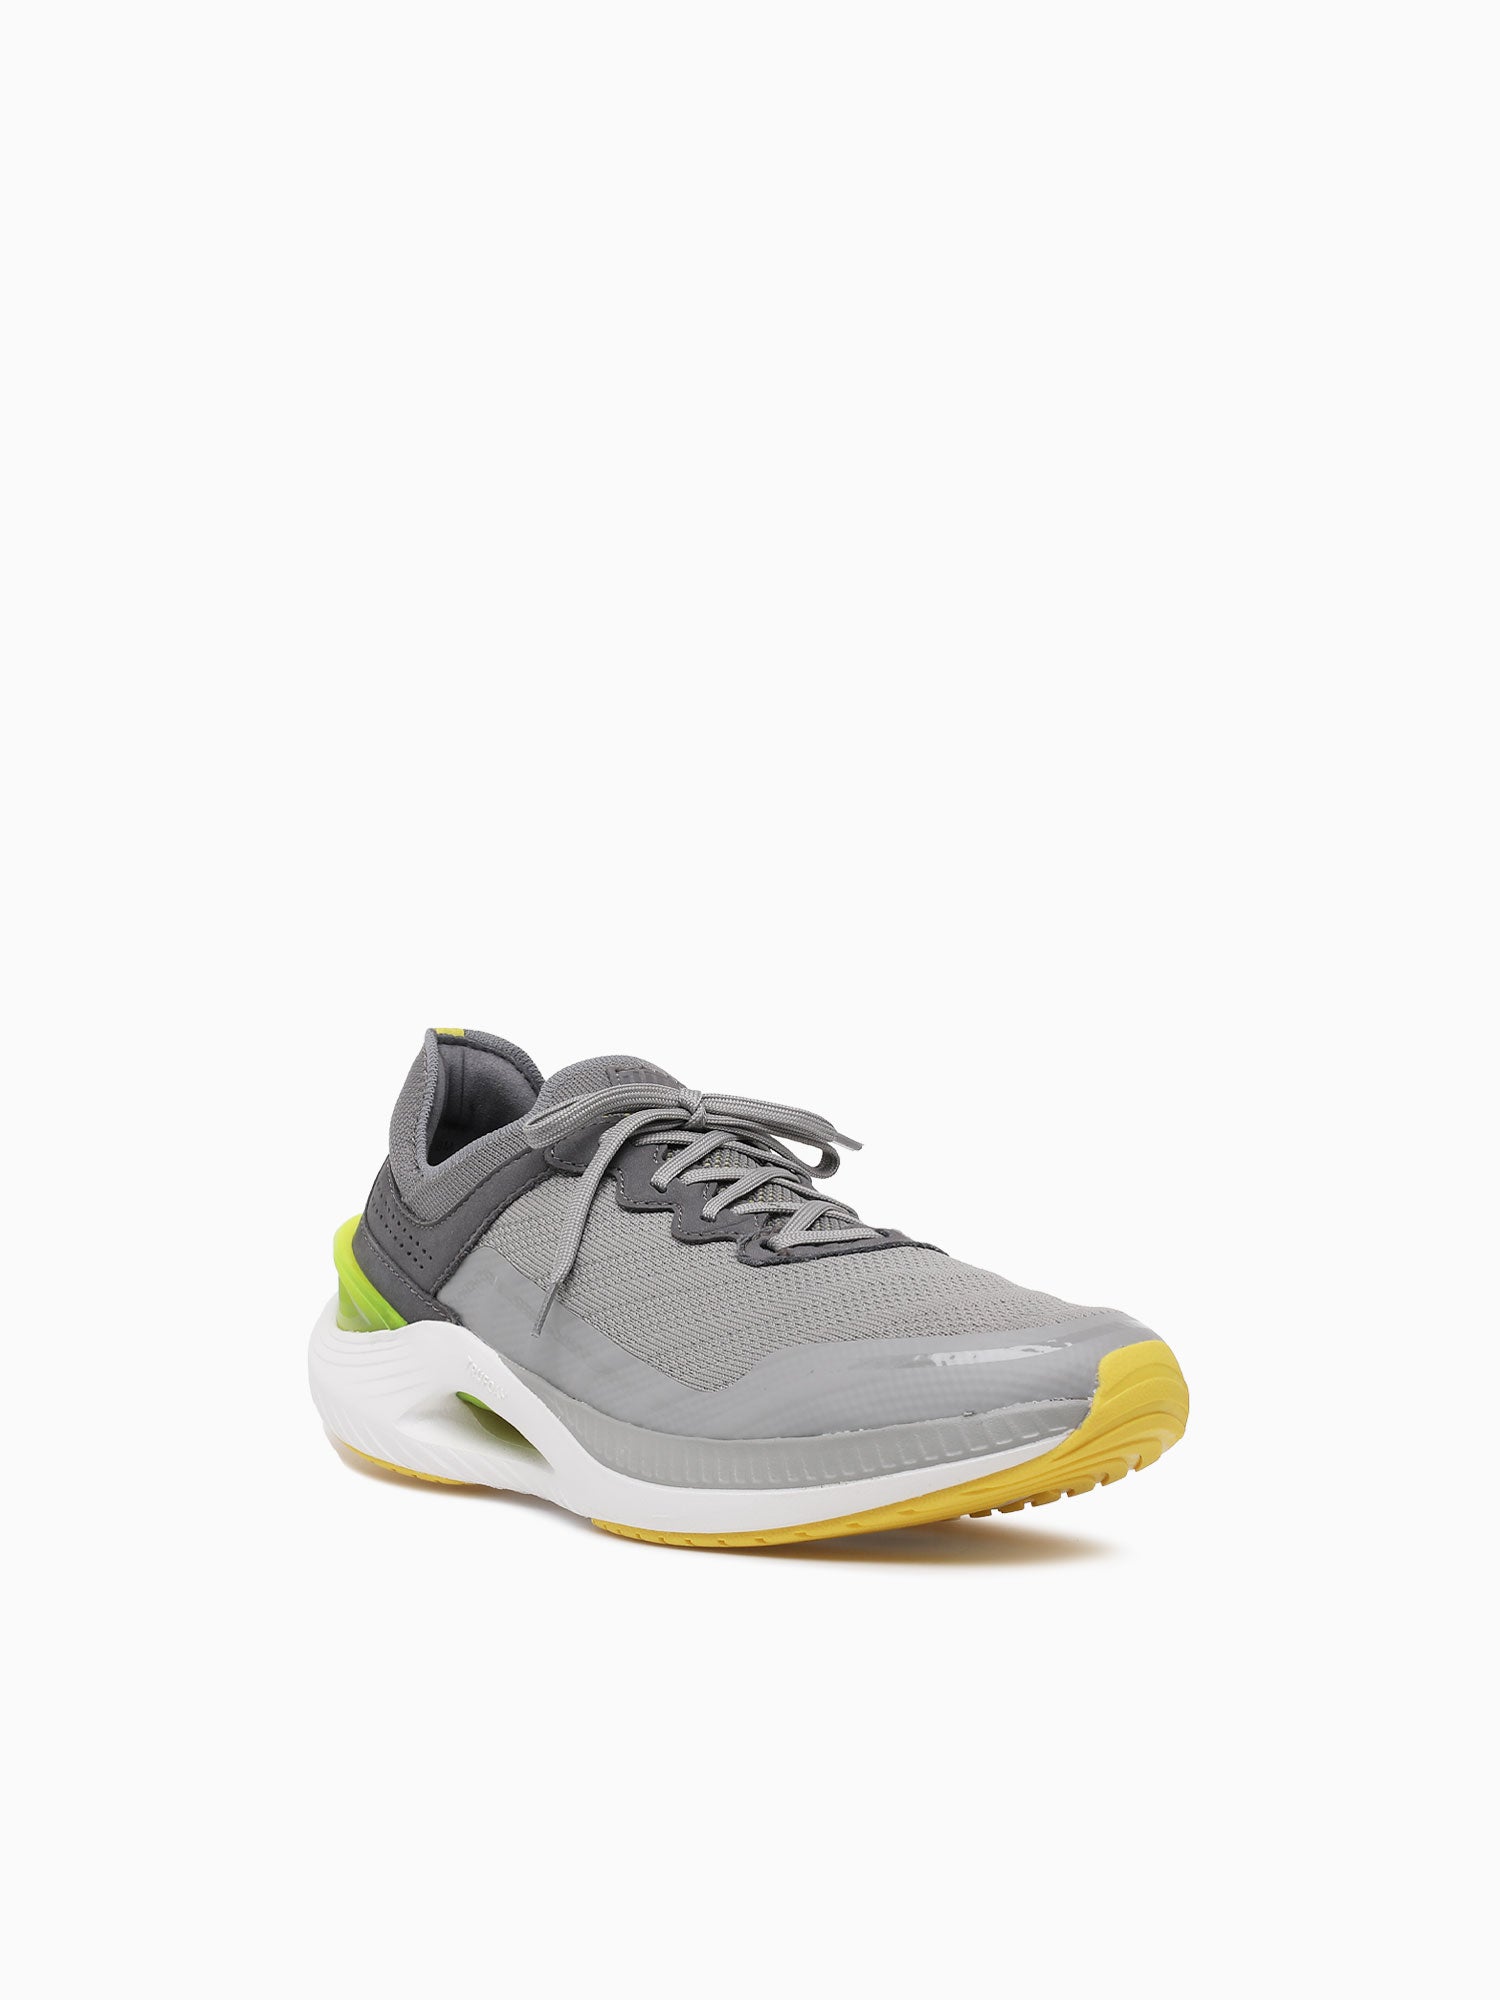 Rt1 Sport Gray Yellow Grey / 7 / M